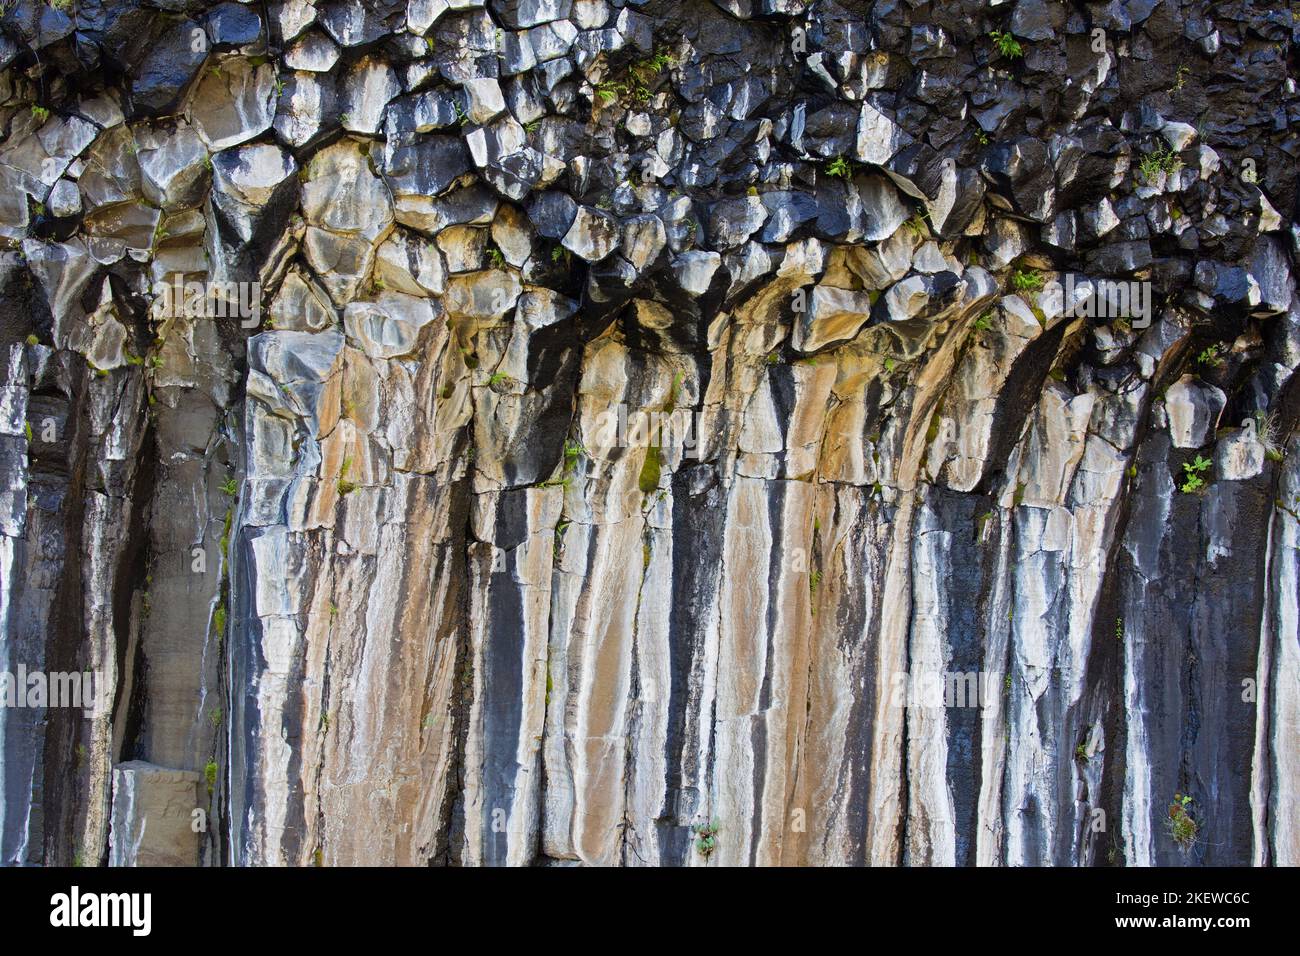 Sechseckige Basaltsäulen / Felsformationen bei Svartifoss, Wasserfall in Skaftafell im Vatnajökull Nationalpark, Austurland, Island Stockfoto